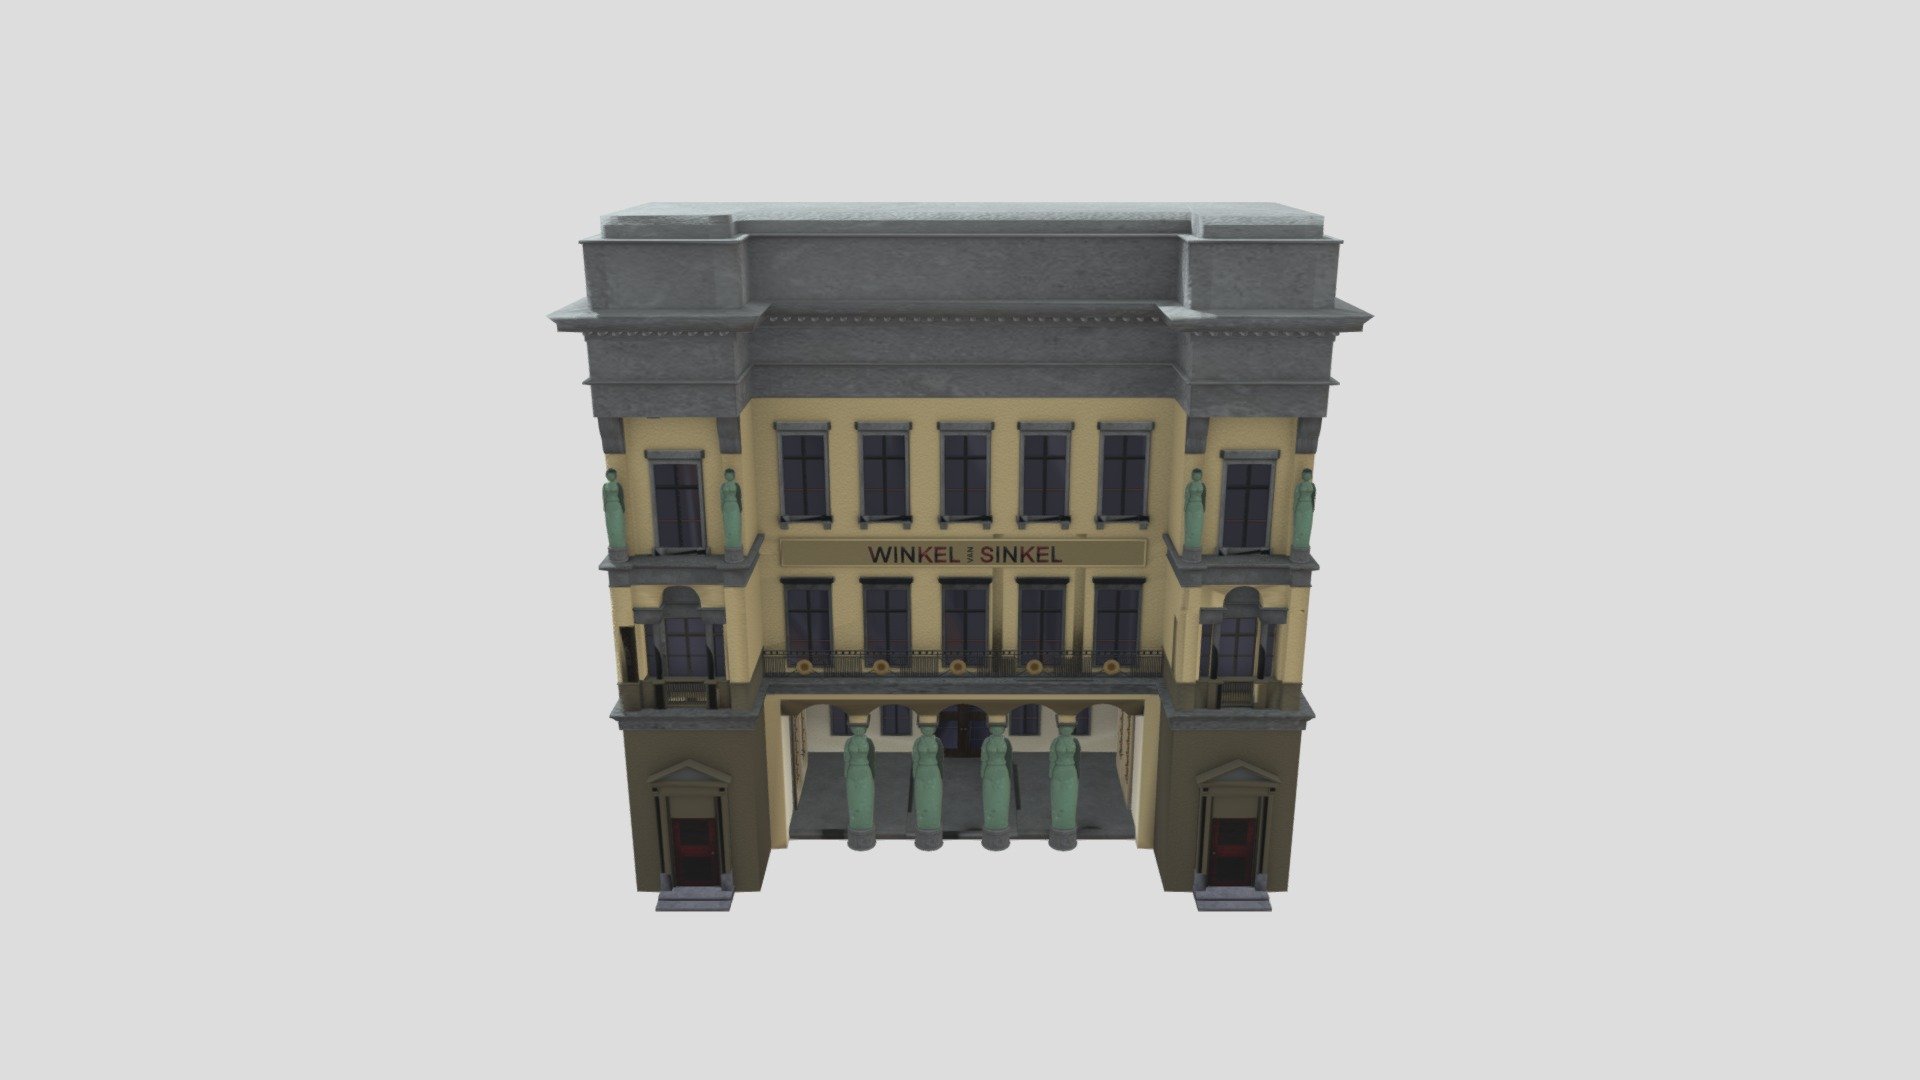 the front of restaurant from the 1800s - Winkel van Sinkel model - 3D model by Maxscorpionz 3d model